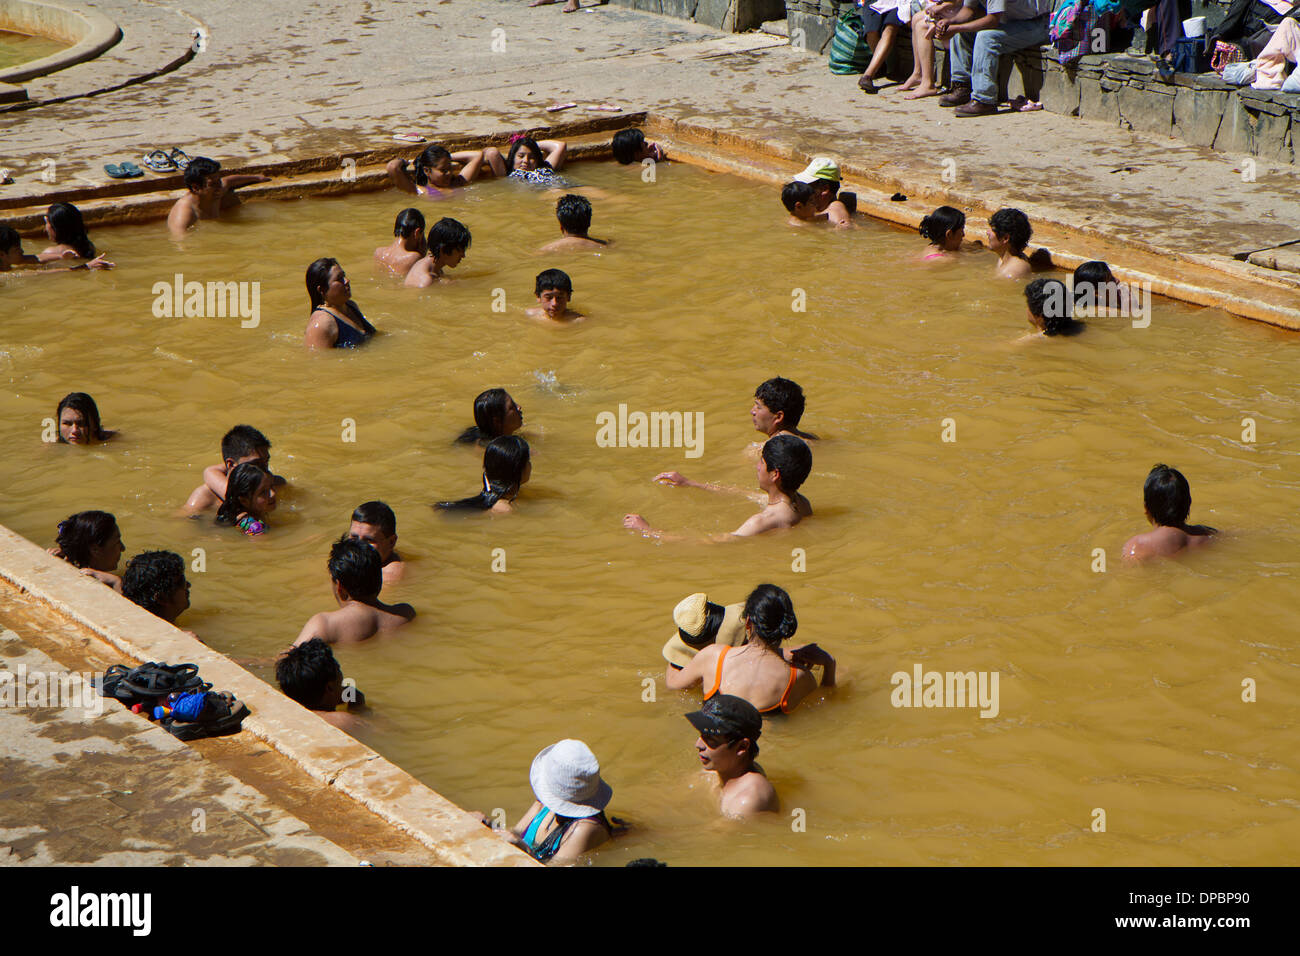 Hot Springs in Lares, Peru Stock Photo